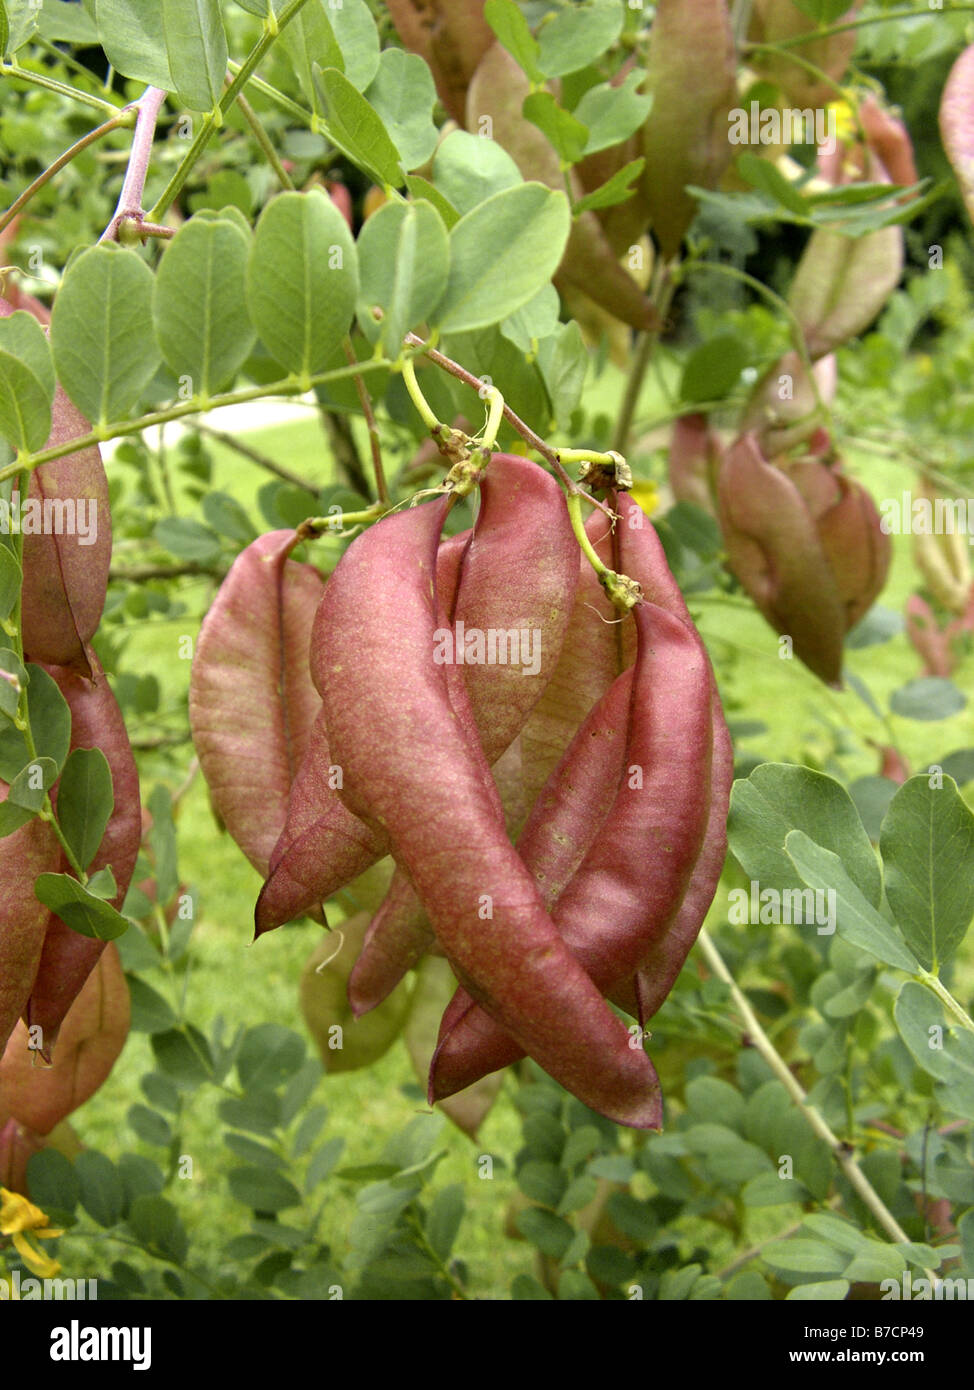 bladder senna, bladder-senna (Colutea arborescens), fruits Stock Photo